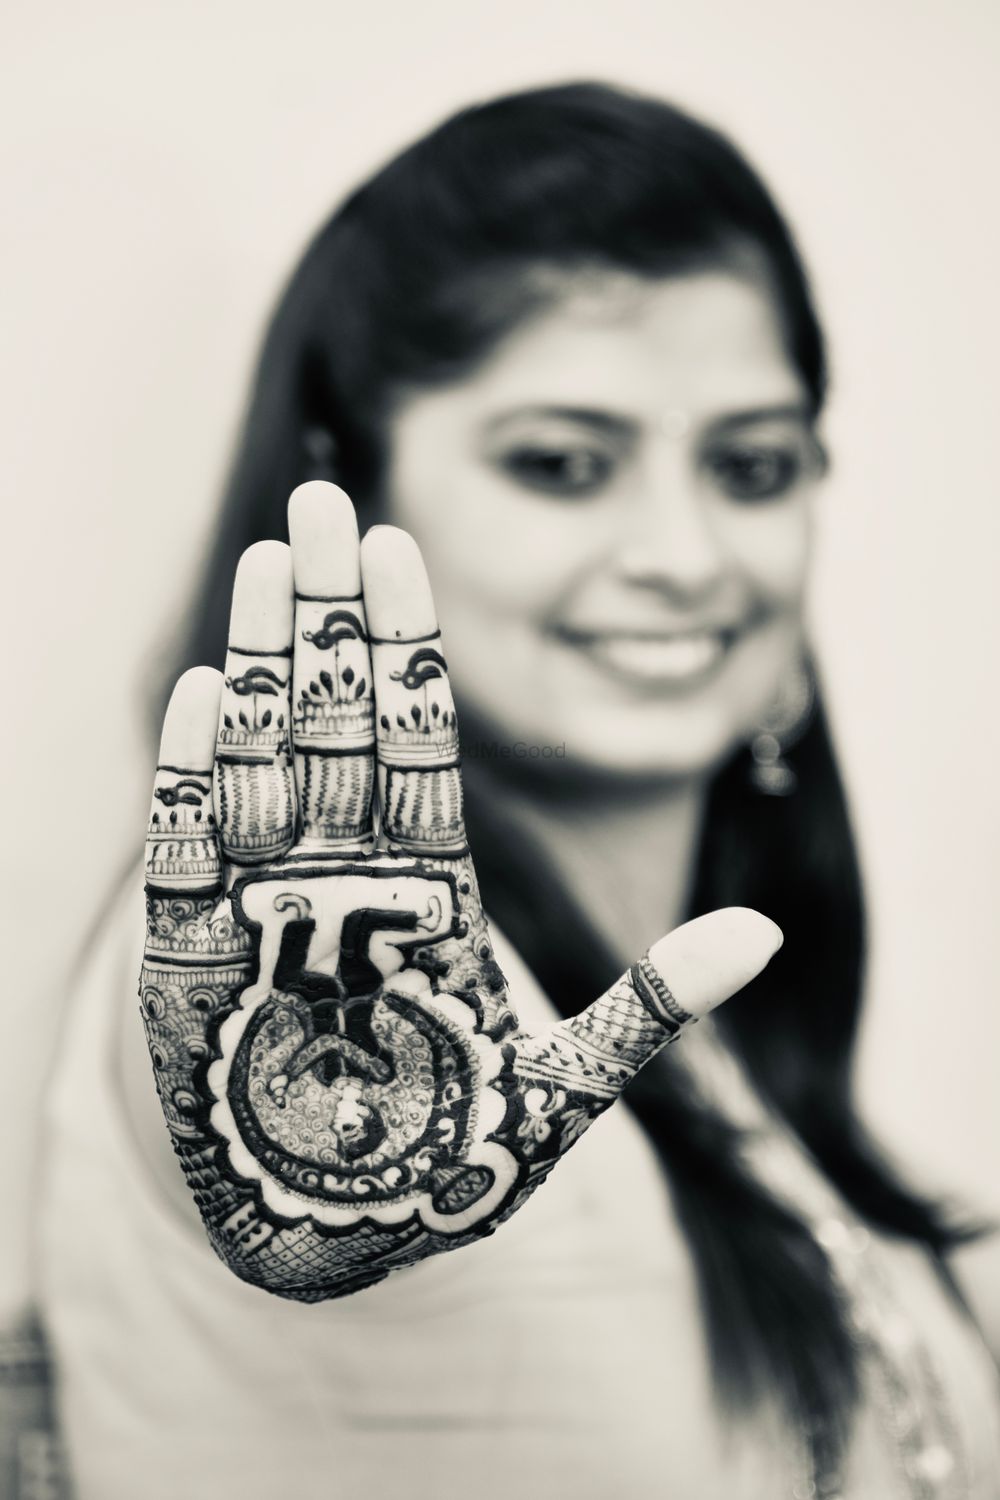 Photo From Manasa's Engagement Mehndi - By Pushpa Mehndi Arts